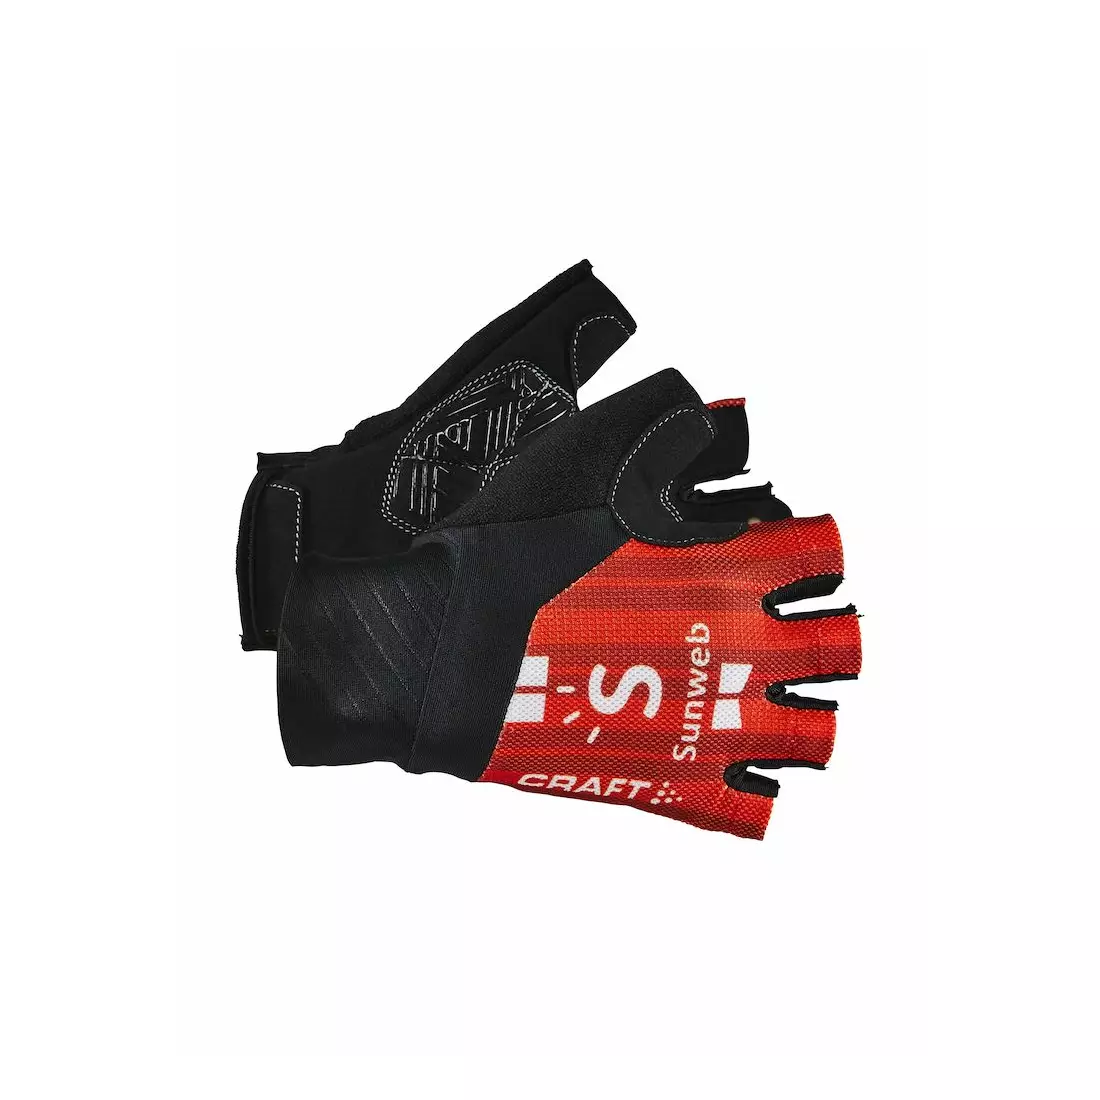 CRAFT SUNWEB 2019 cycling gloves replica 1908214-426000